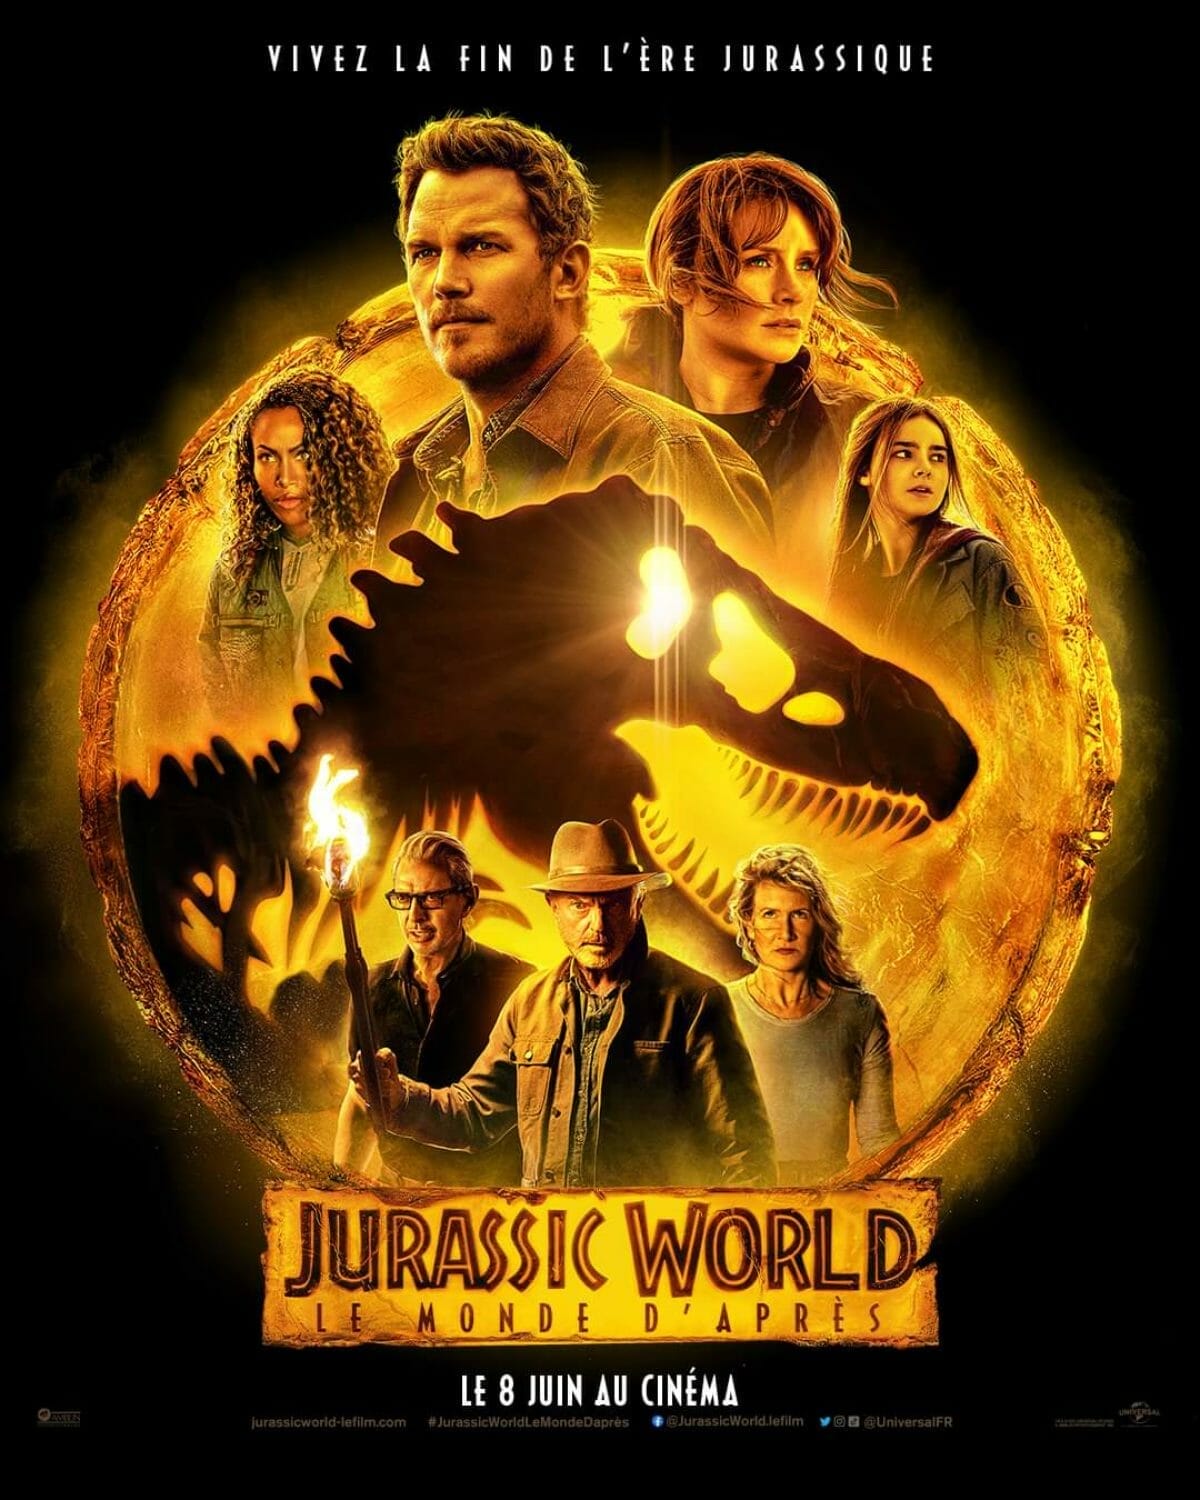 Jurassic-world-le-monde-dapres-poster